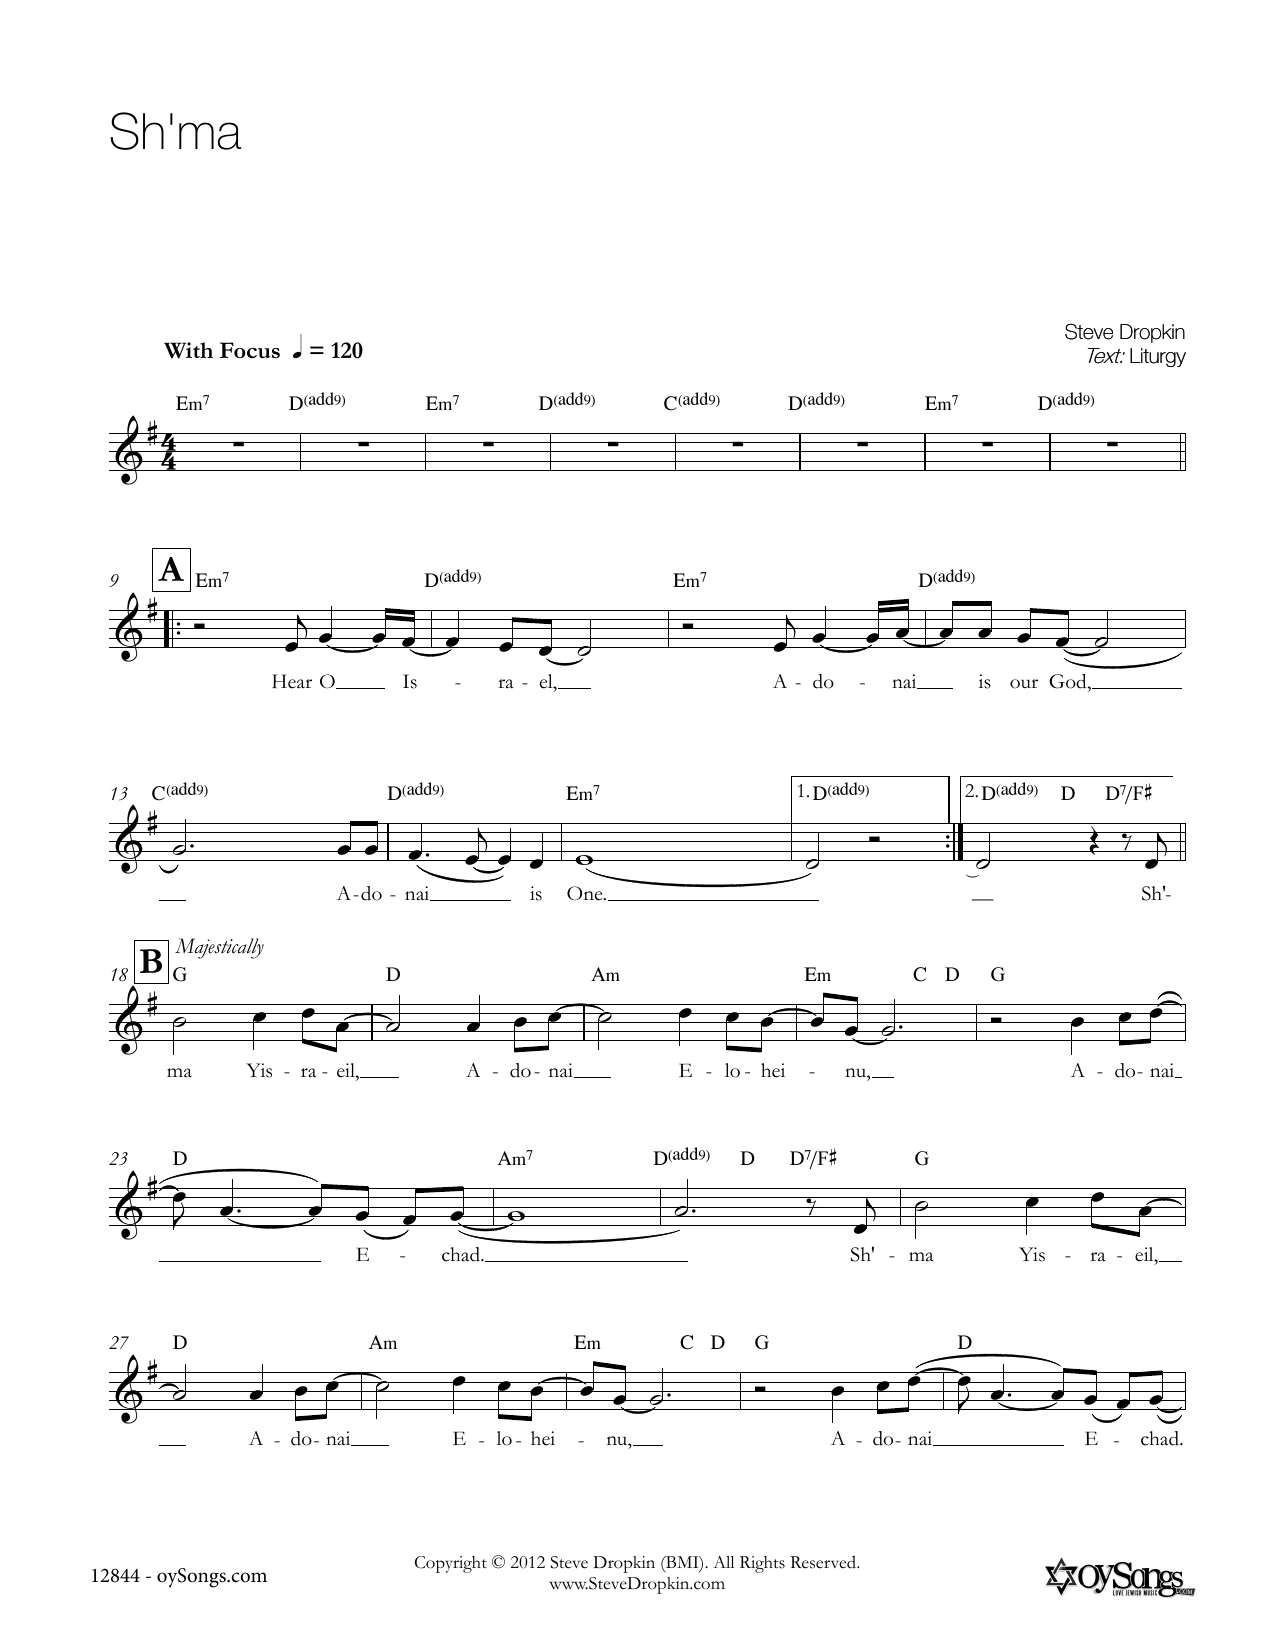 Steve Dropkin Sh'ma Sheet Music Notes & Chords for Melody Line, Lyrics & Chords - Download or Print PDF